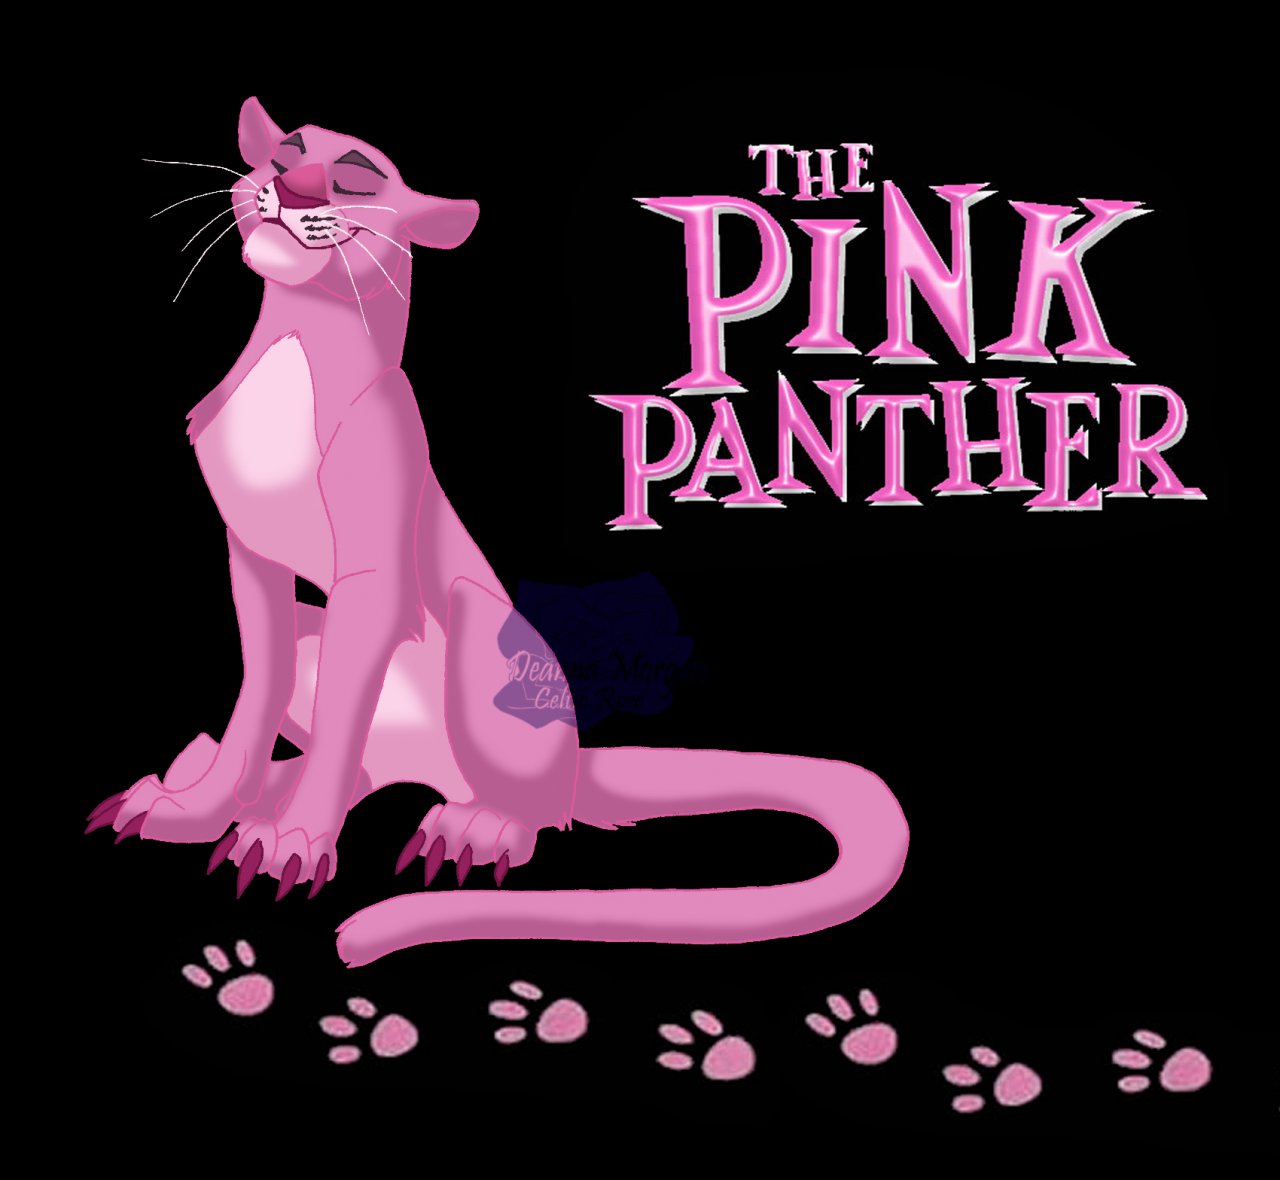 Pink Panther Fan Art: Punk Panther  Pink panther cartoon, Pink panter, Pink  panthers